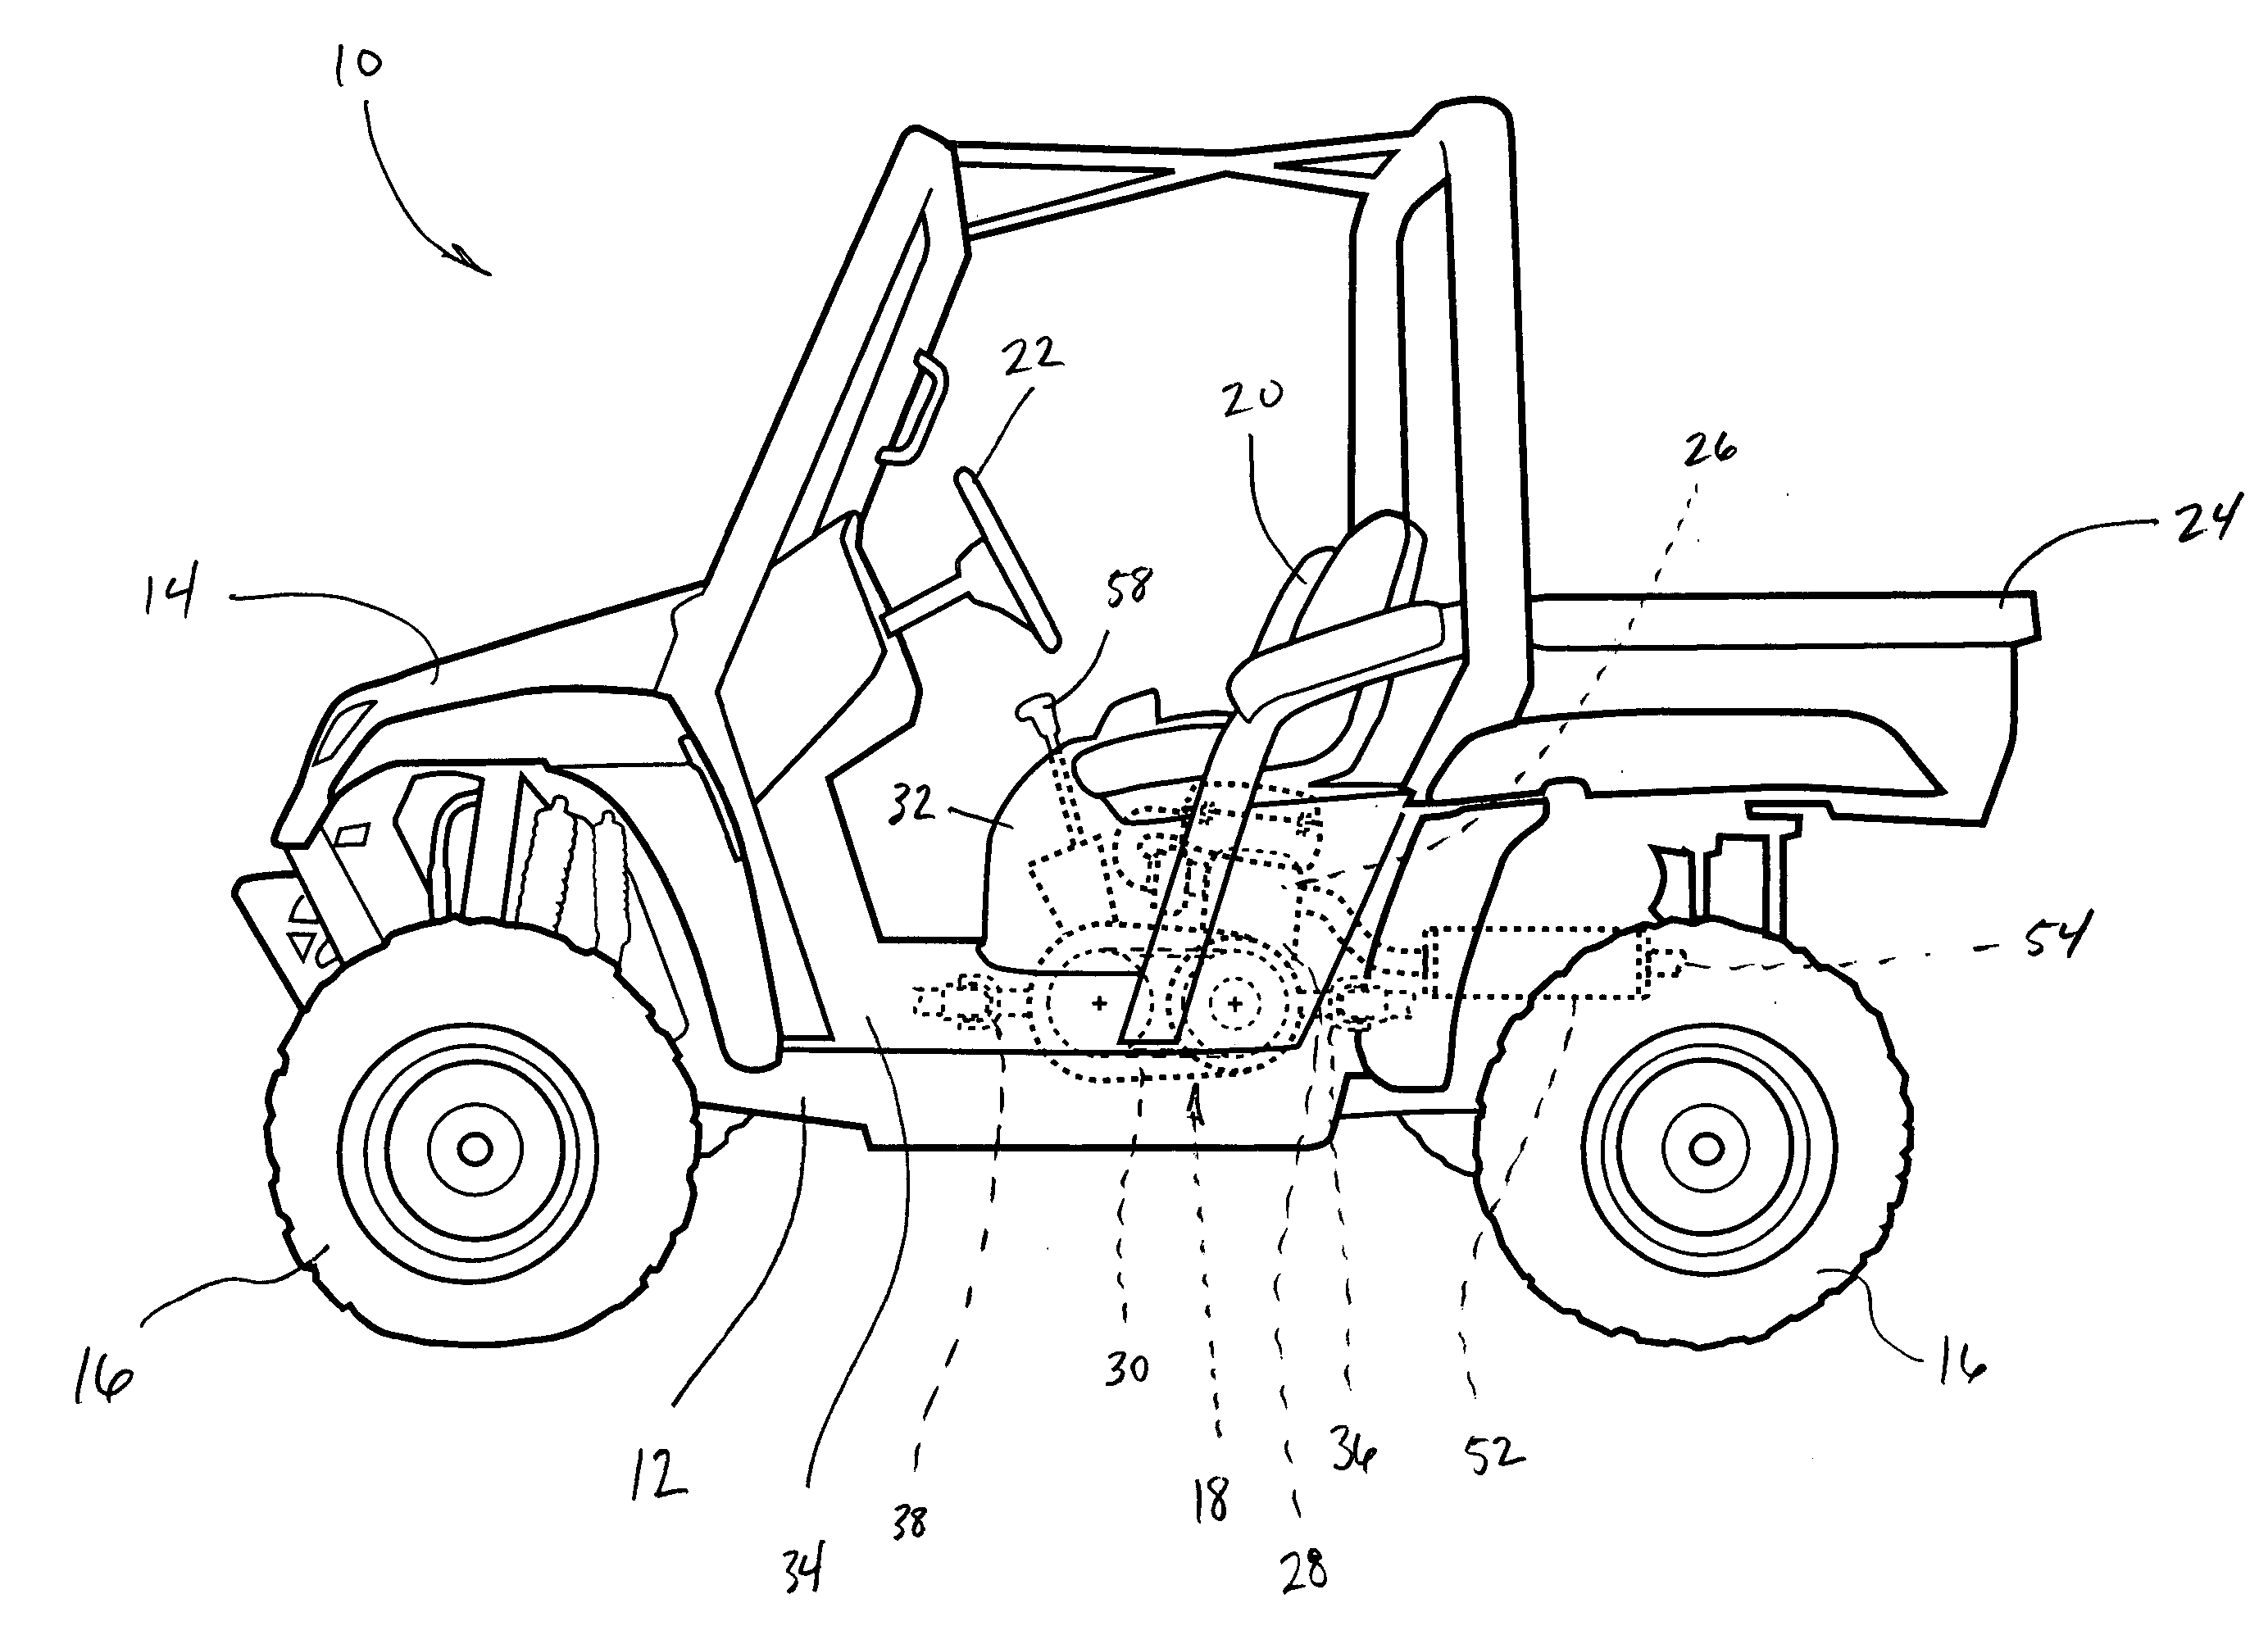 All-terrain vehicle engine configuration